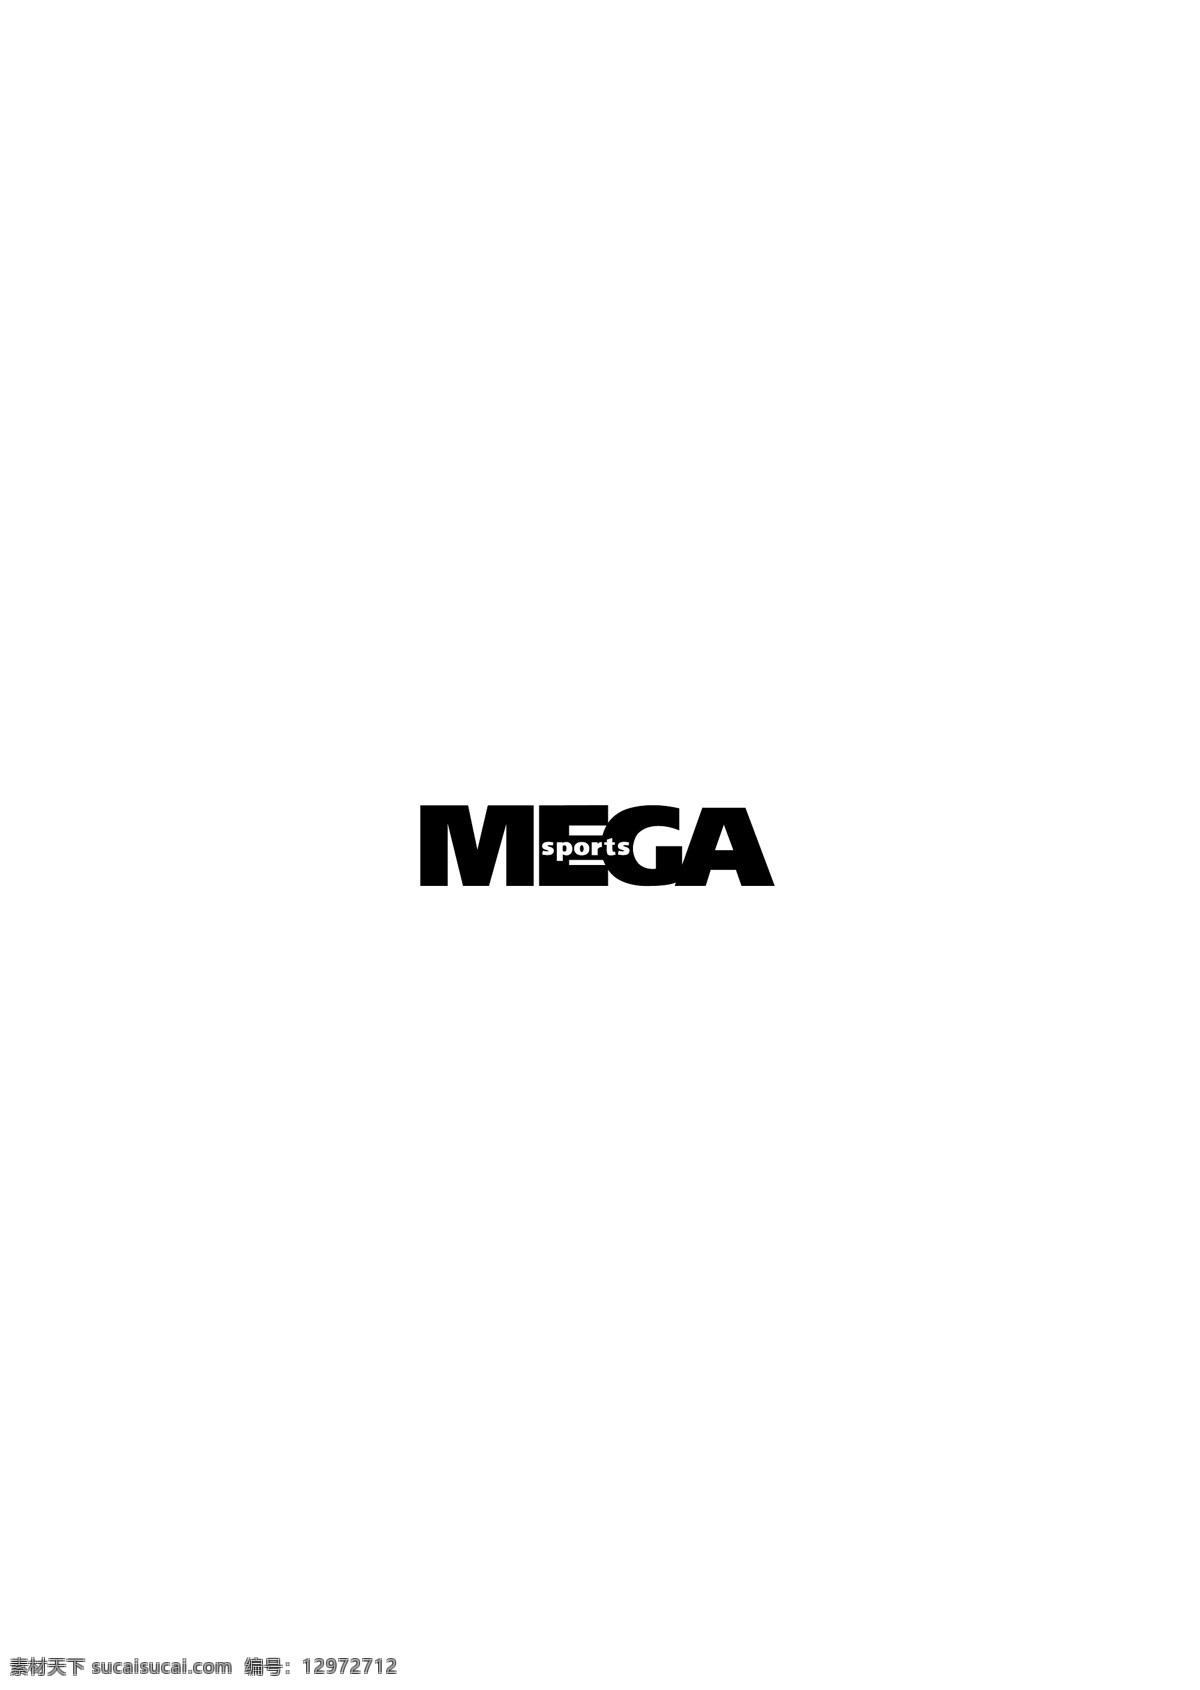 logo大全 logo 设计欣赏 商业矢量 矢量下载 megasports 运动 赛事 标志 标志设计 欣赏 网页矢量 矢量图 其他矢量图